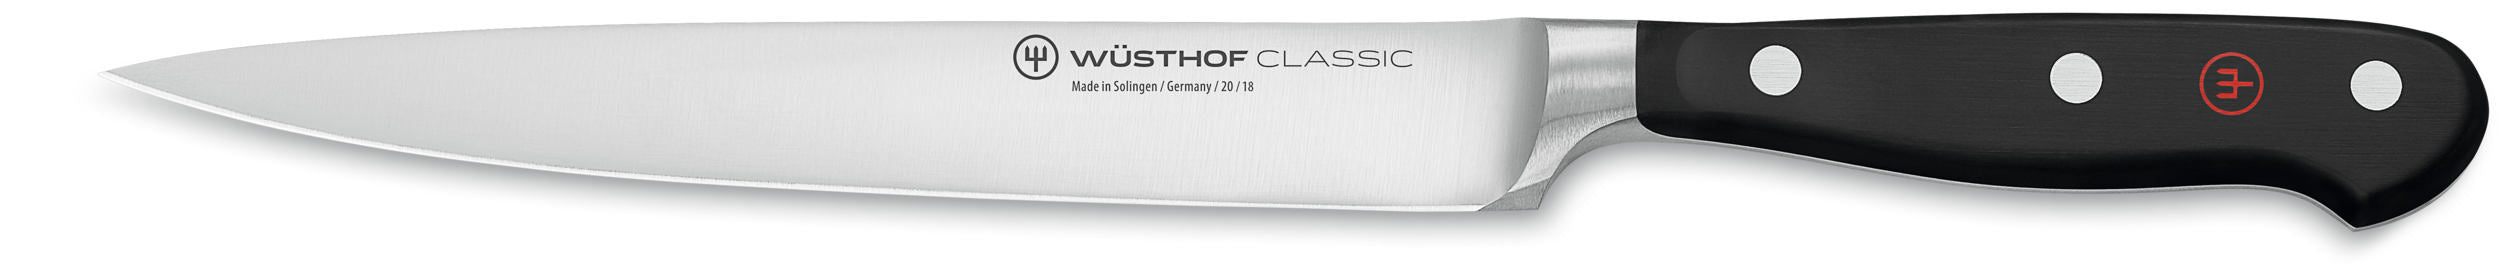 Wusthof classic flexible fillet knife 7 Black